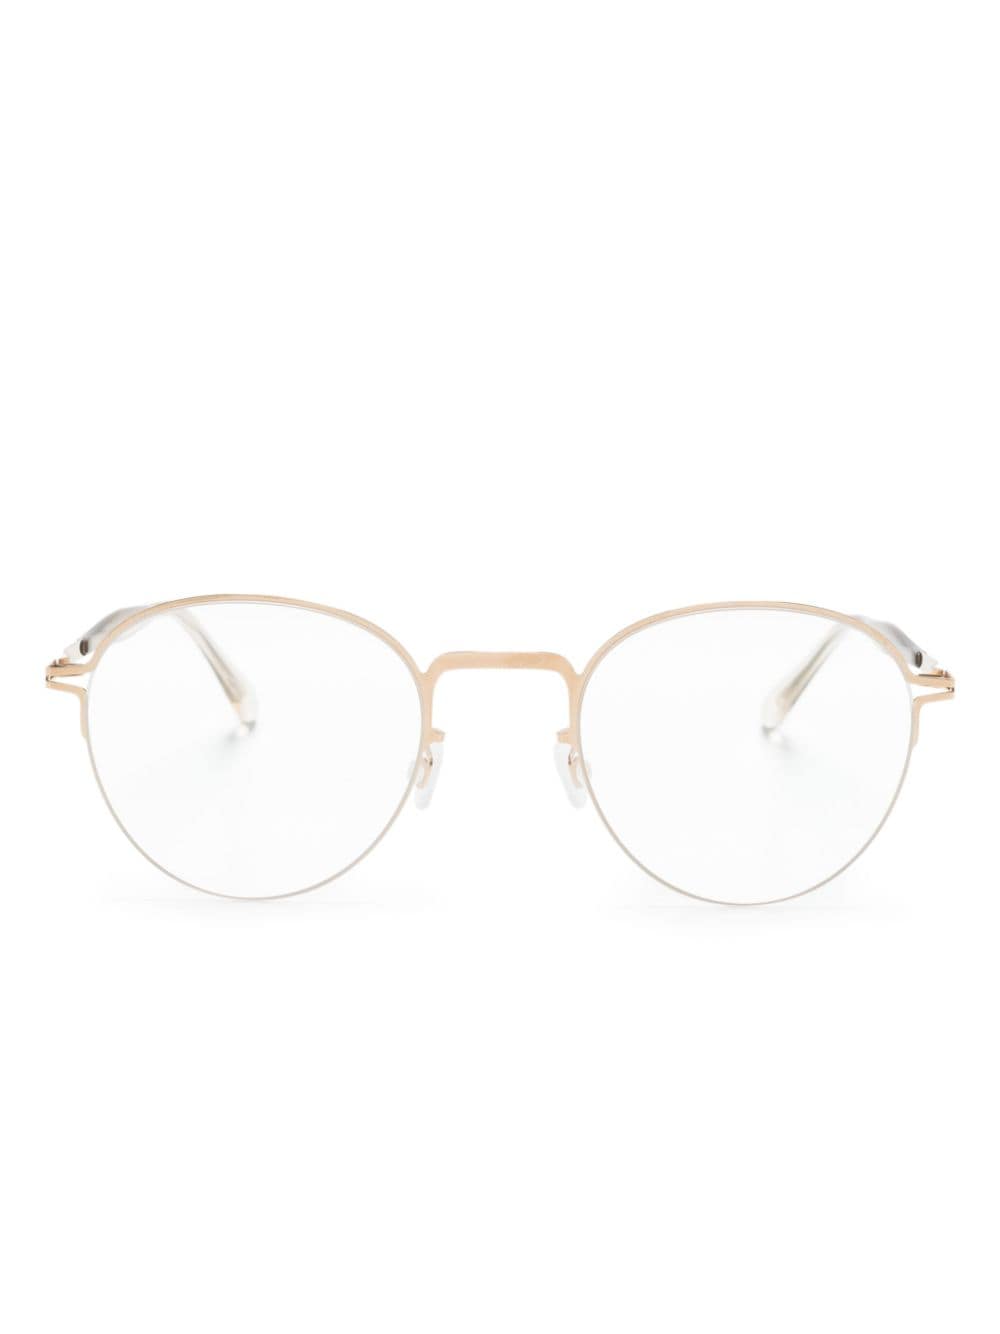 Mykita Tate oval-frame glasses - Gold von Mykita